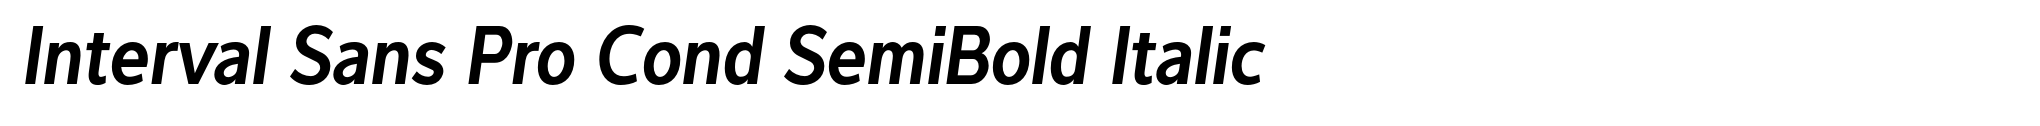 Interval Sans Pro Cond SemiBold Italic image